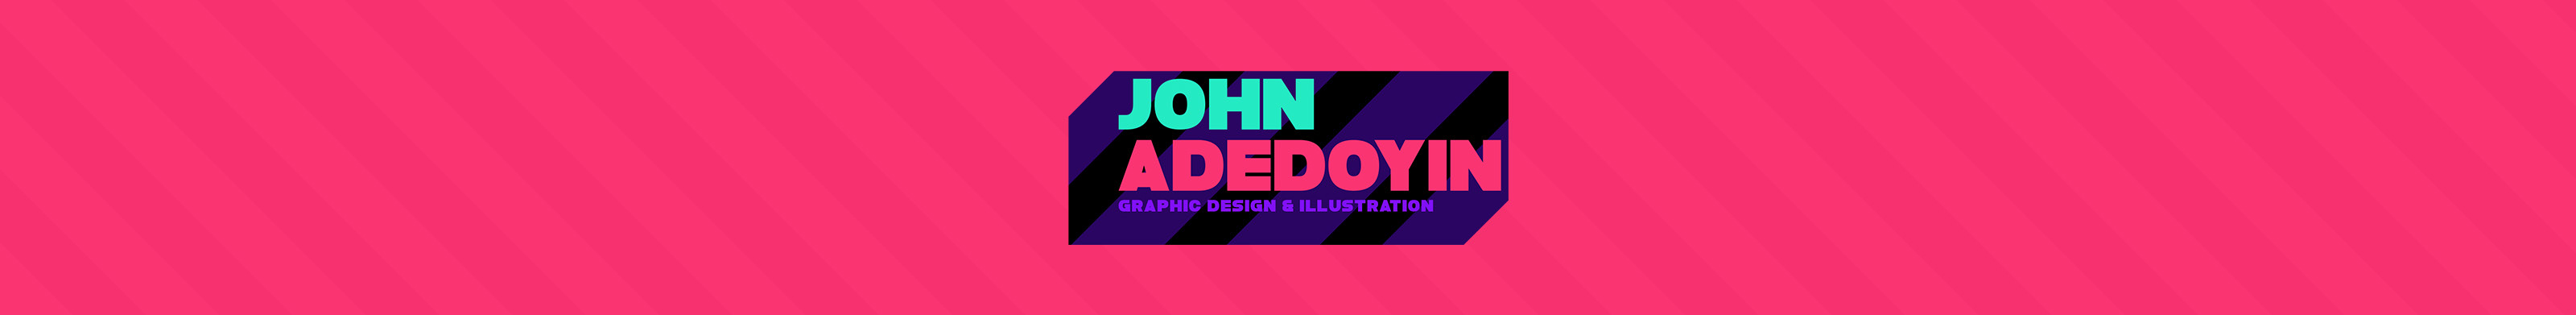 John Adedoyin's profile banner